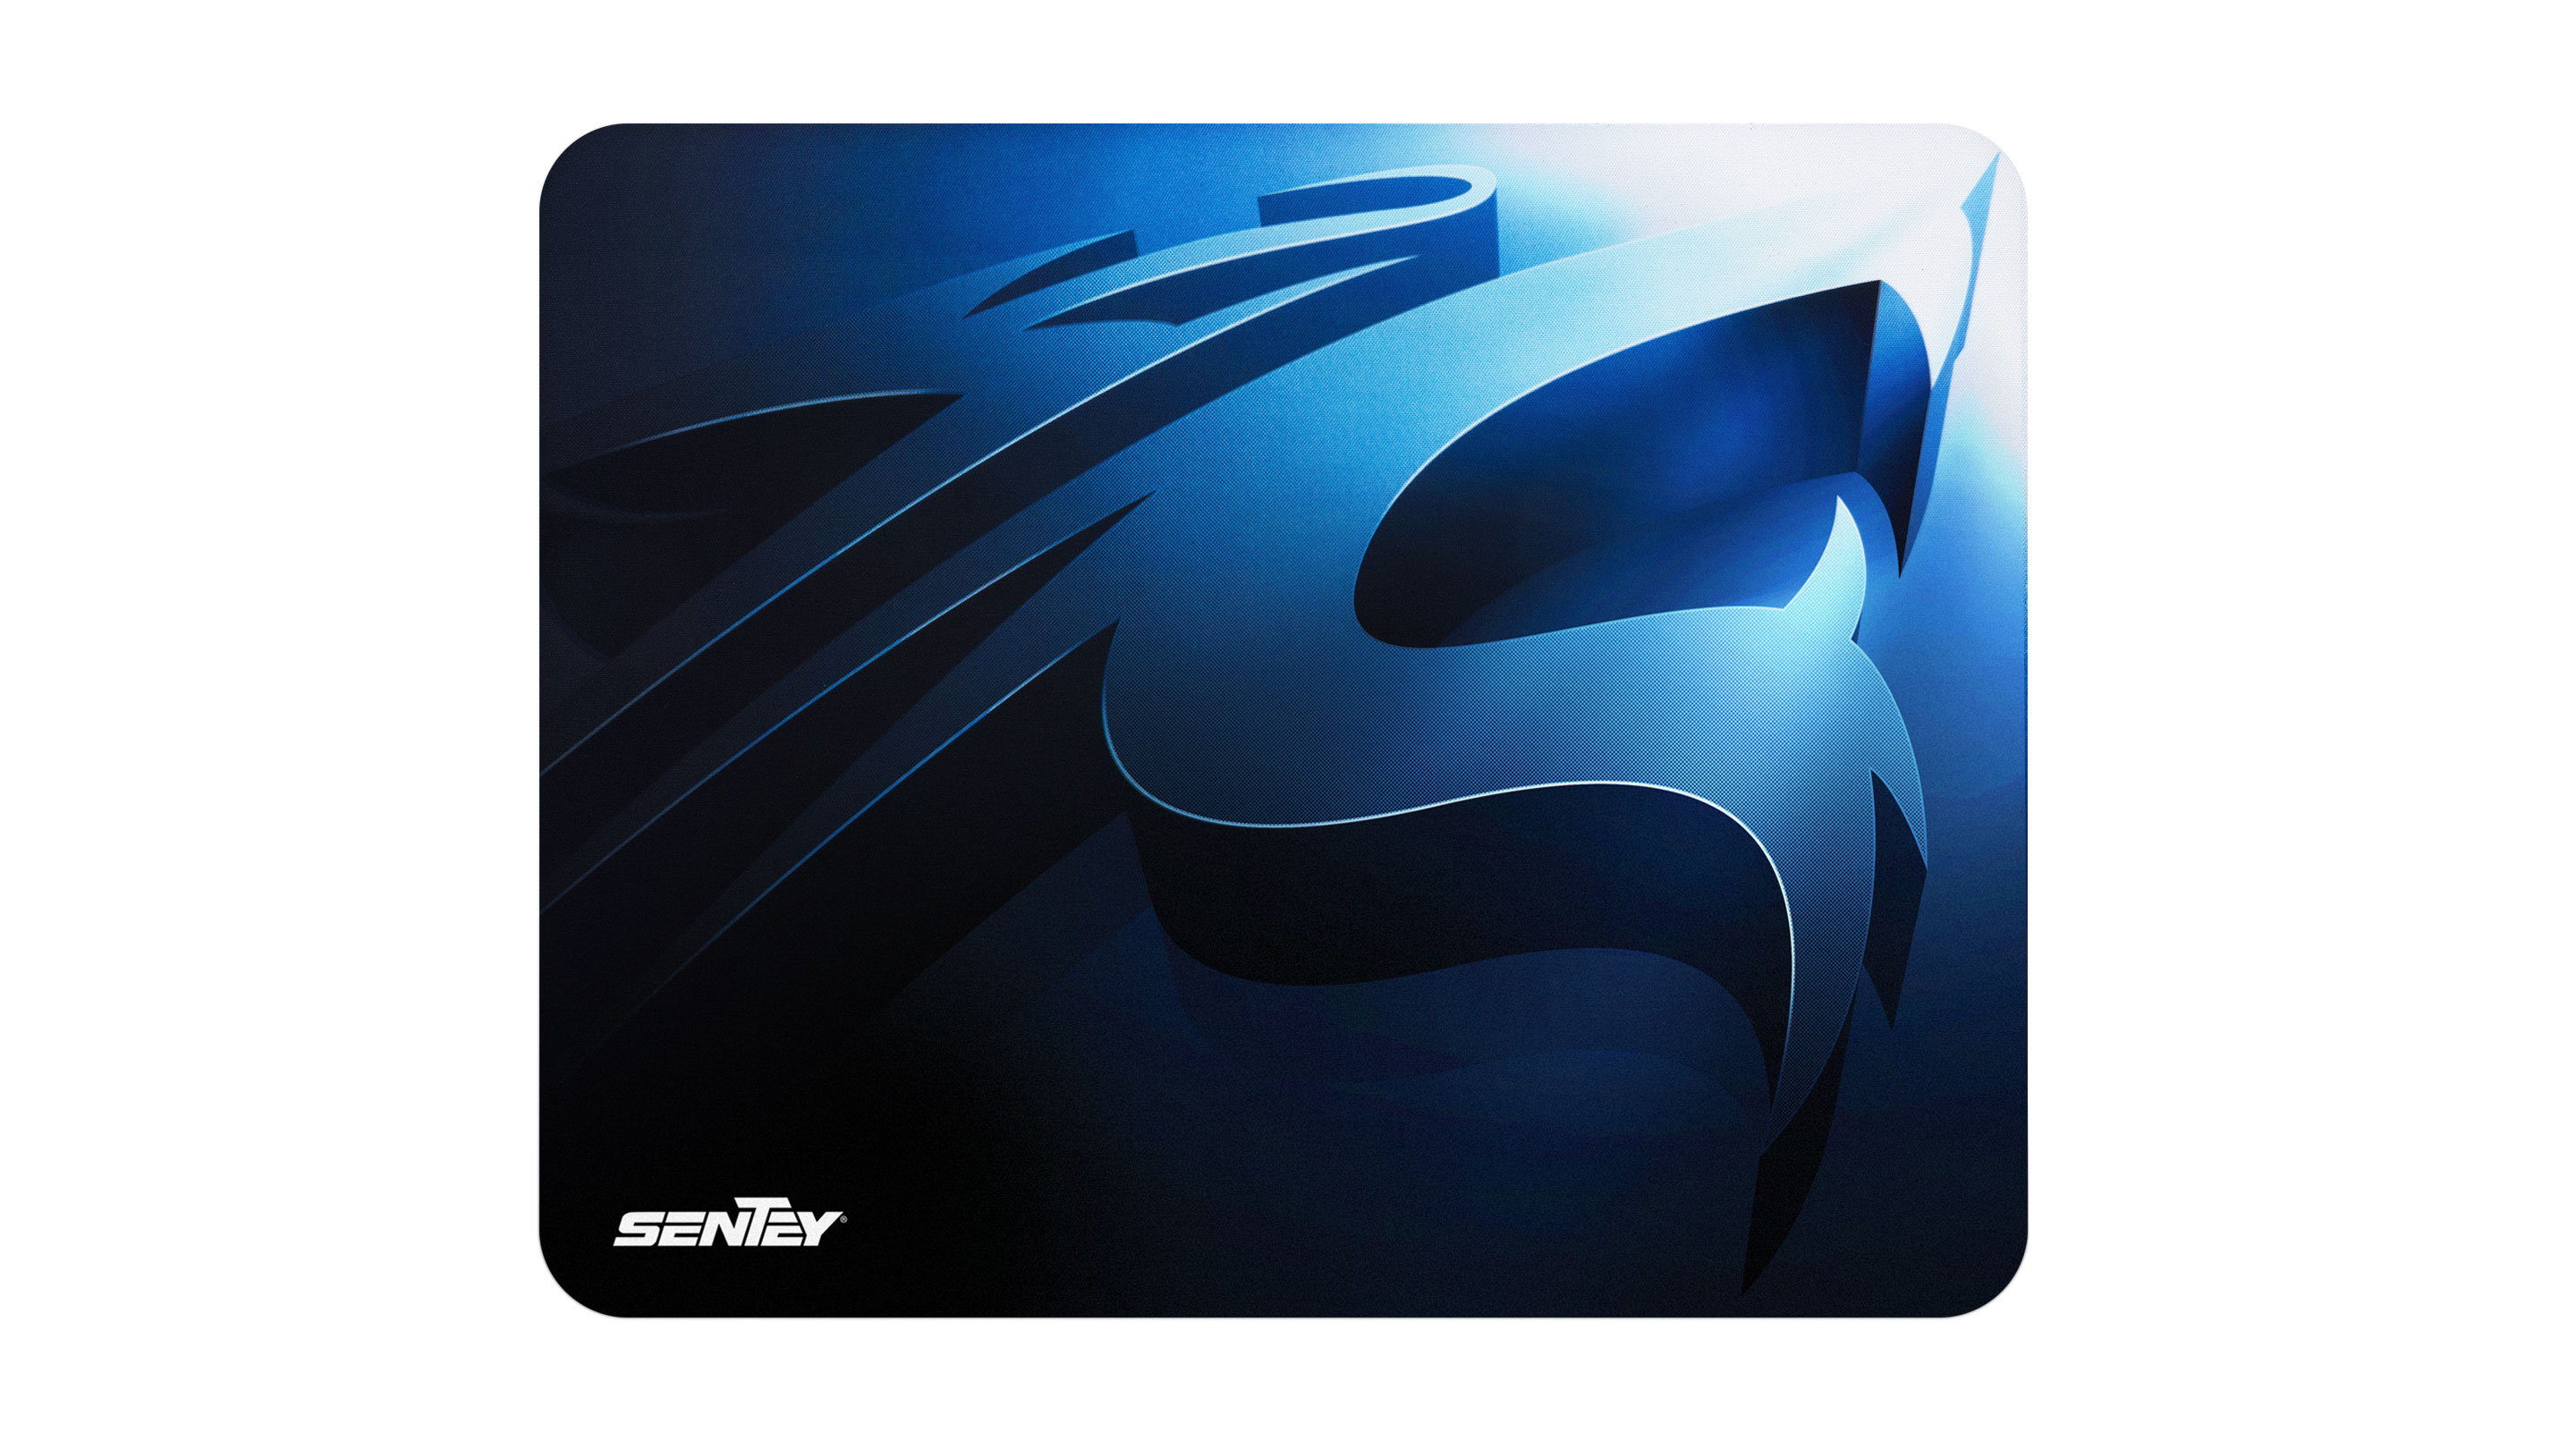 Sentey-Origins  Gs 2300-gamer mouse pad 